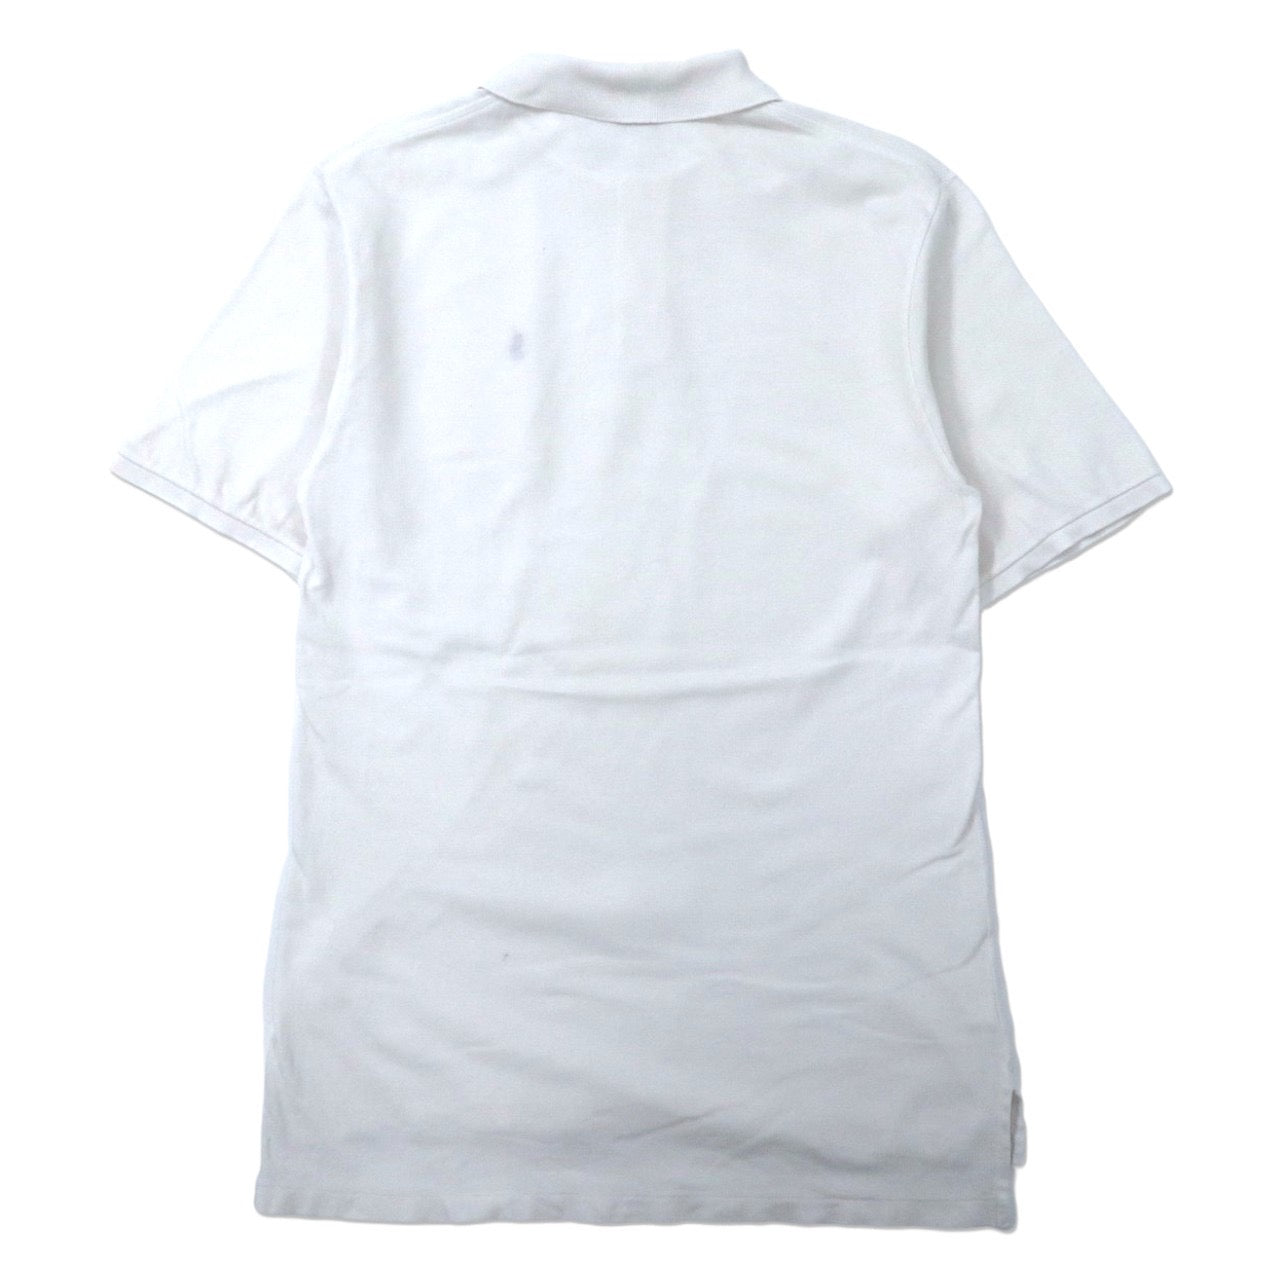 Polo by Ralph Lauren ポロシャツ XL ホワイト コットン スモールポニー刺繍